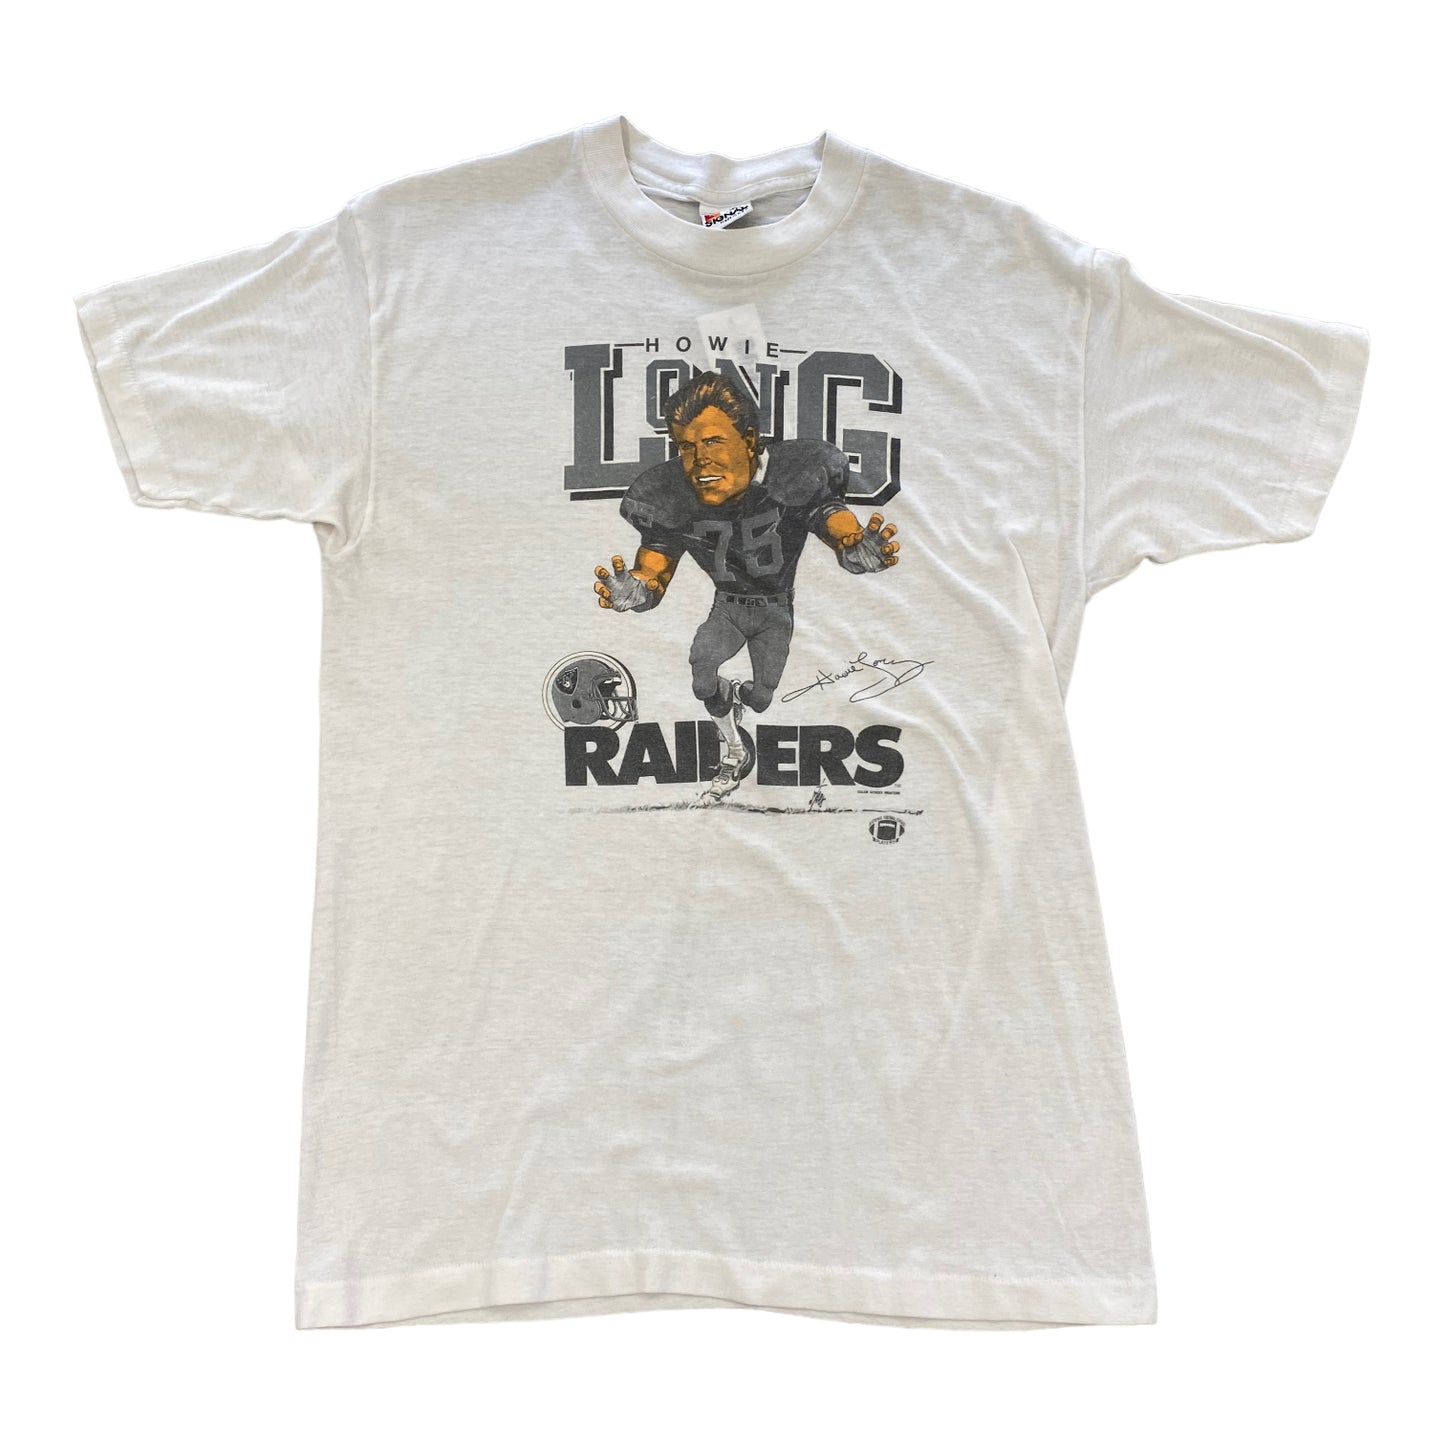 1980s raiders howie long vintage t shirt